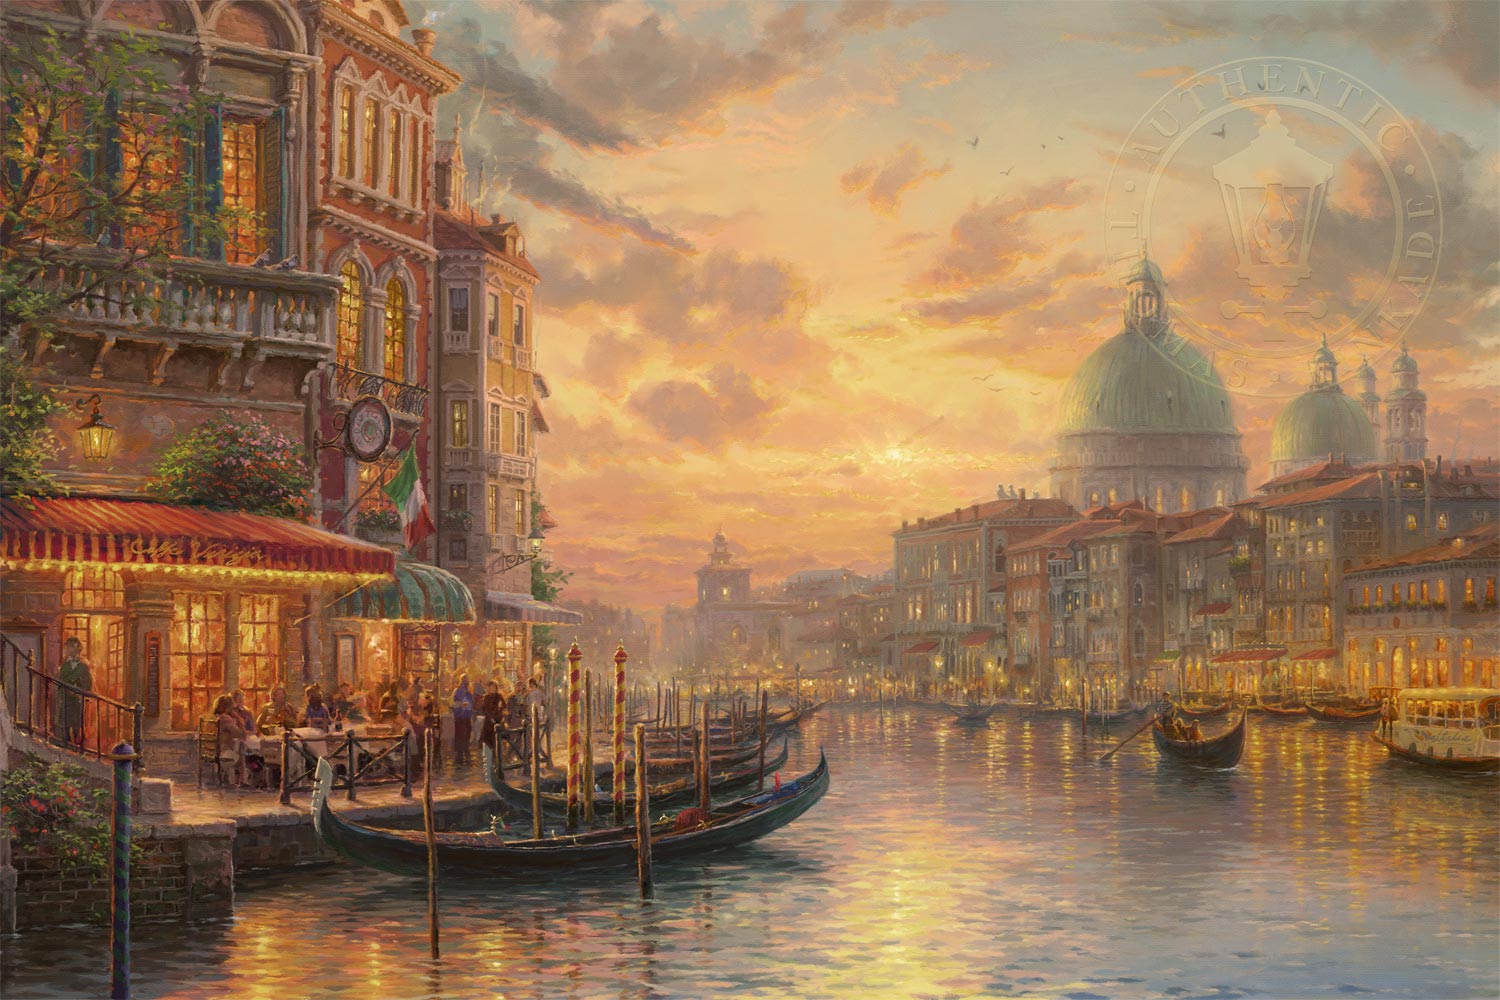 Venetian Café